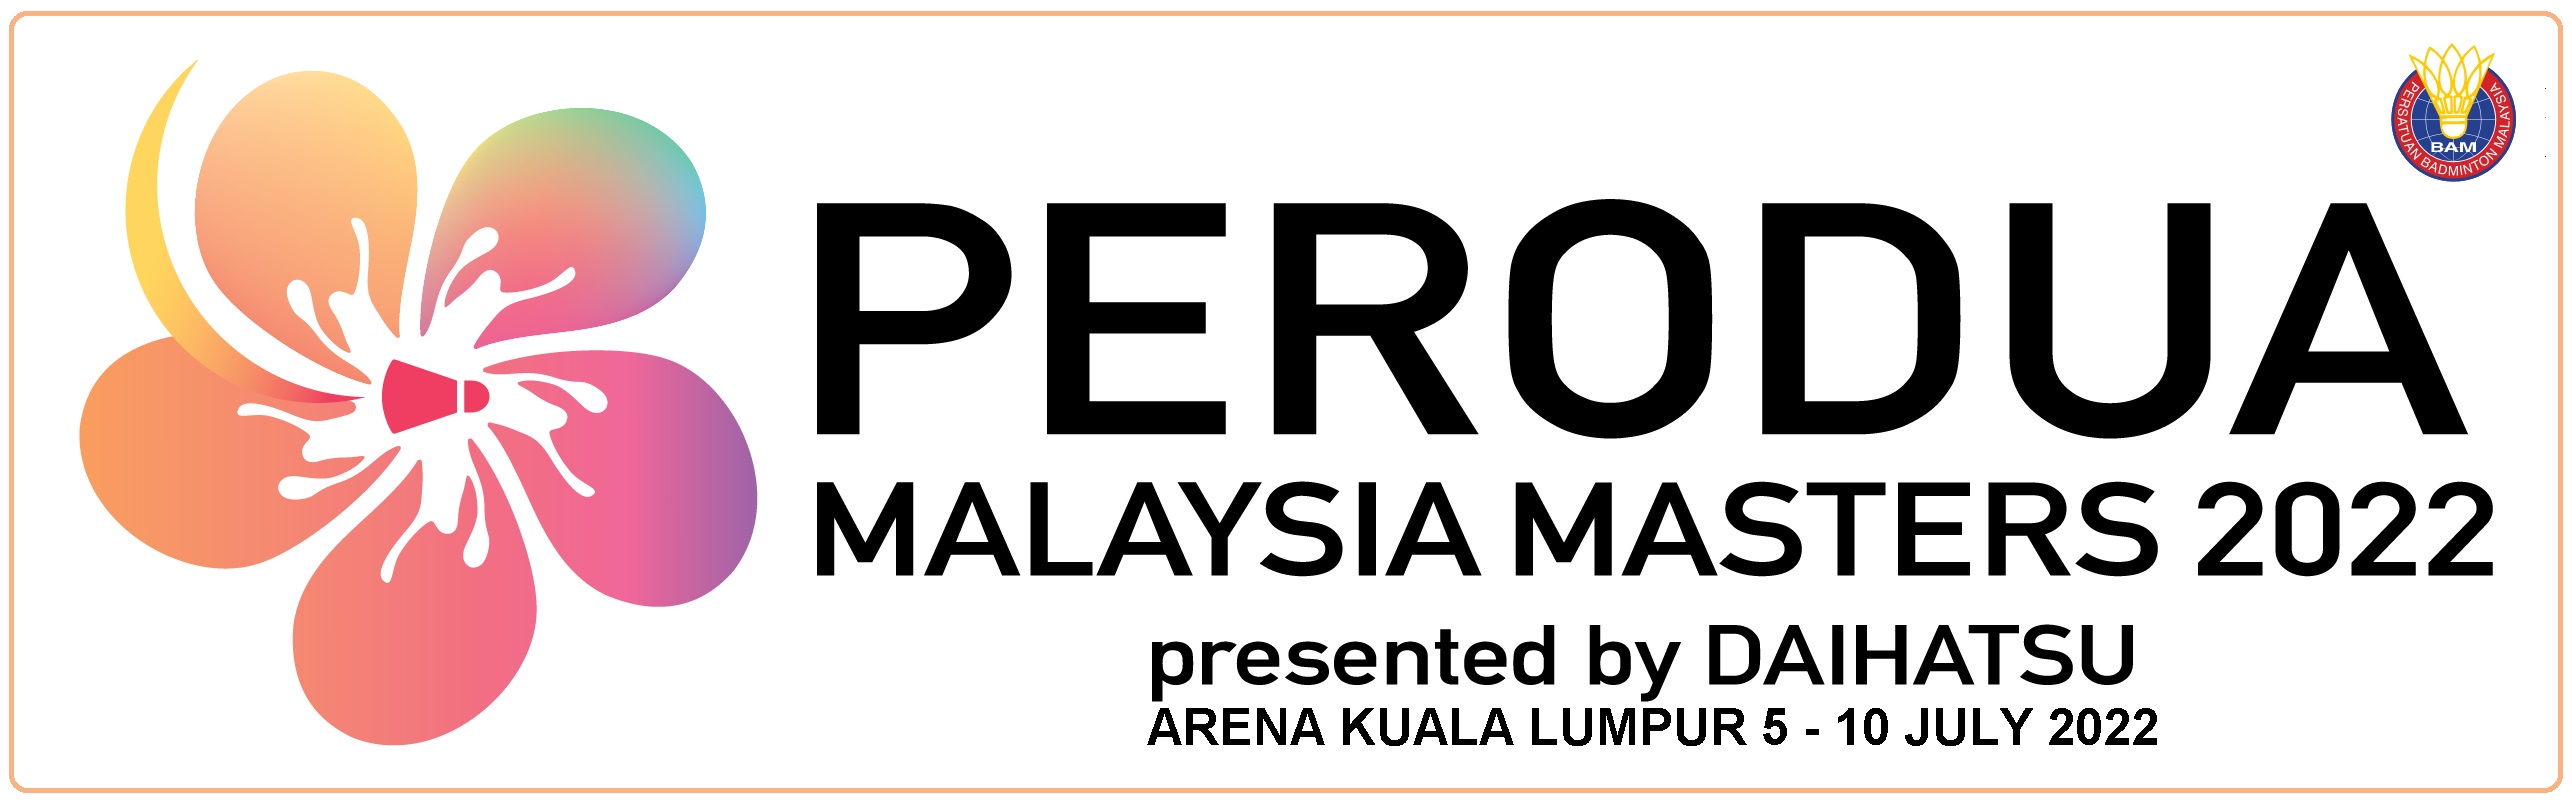 #PERODUA Malaysia Masters 2022
5- 10 JULY